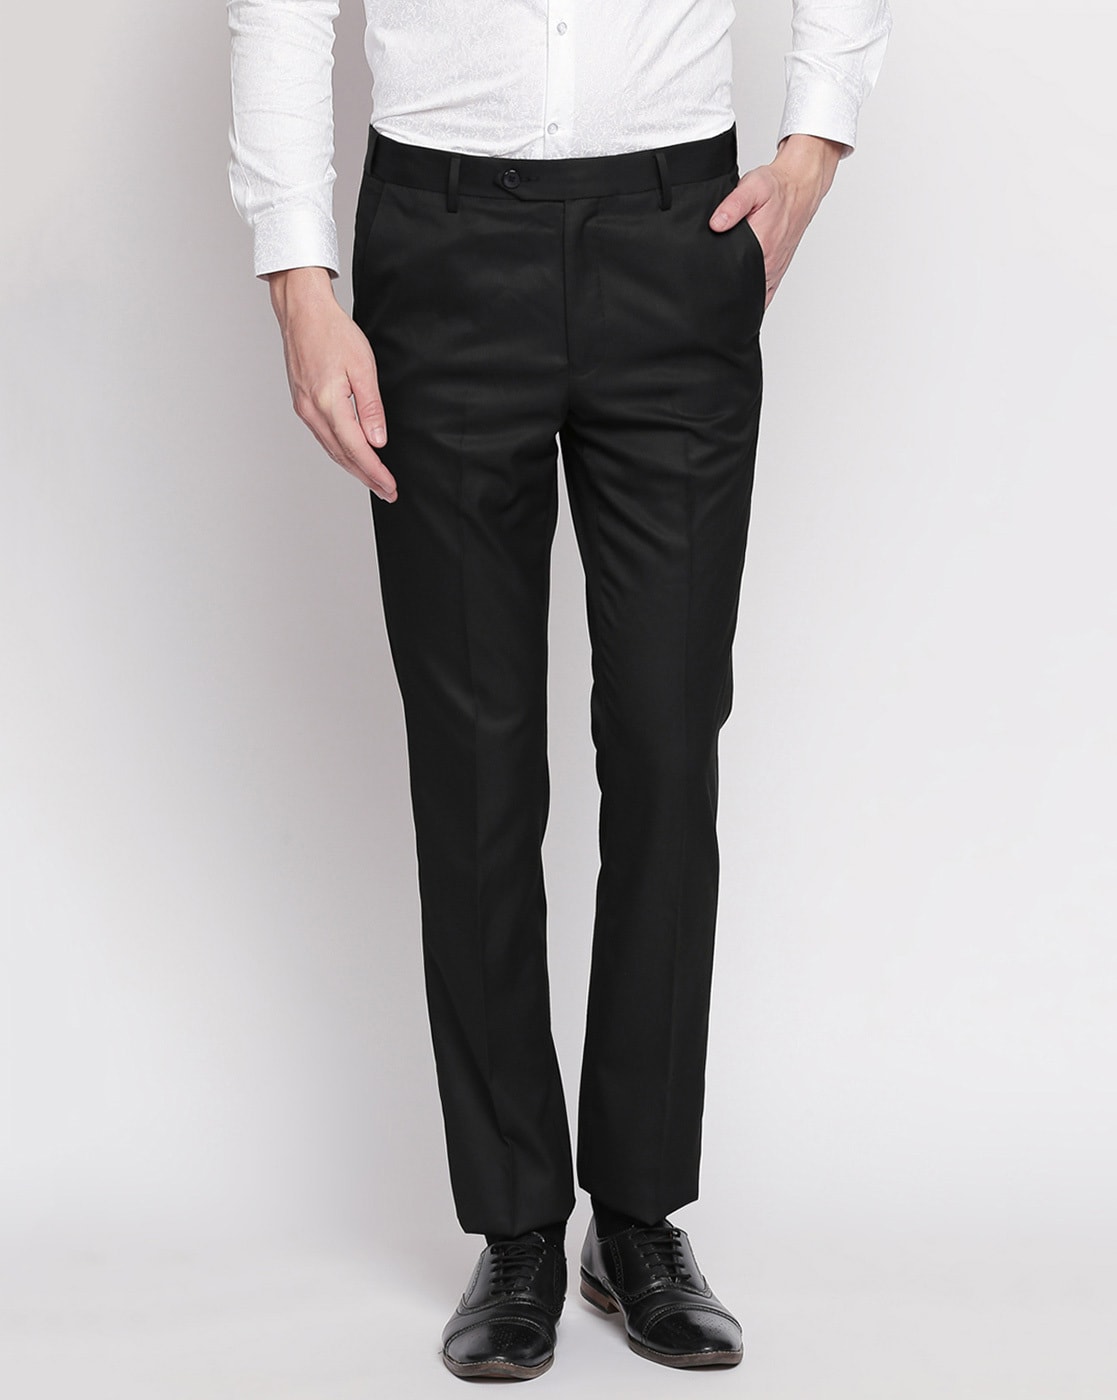 Charcoal Solid Full Length Formal Men Slim Fit Trousers - Selling Fast at  Pantaloons.com